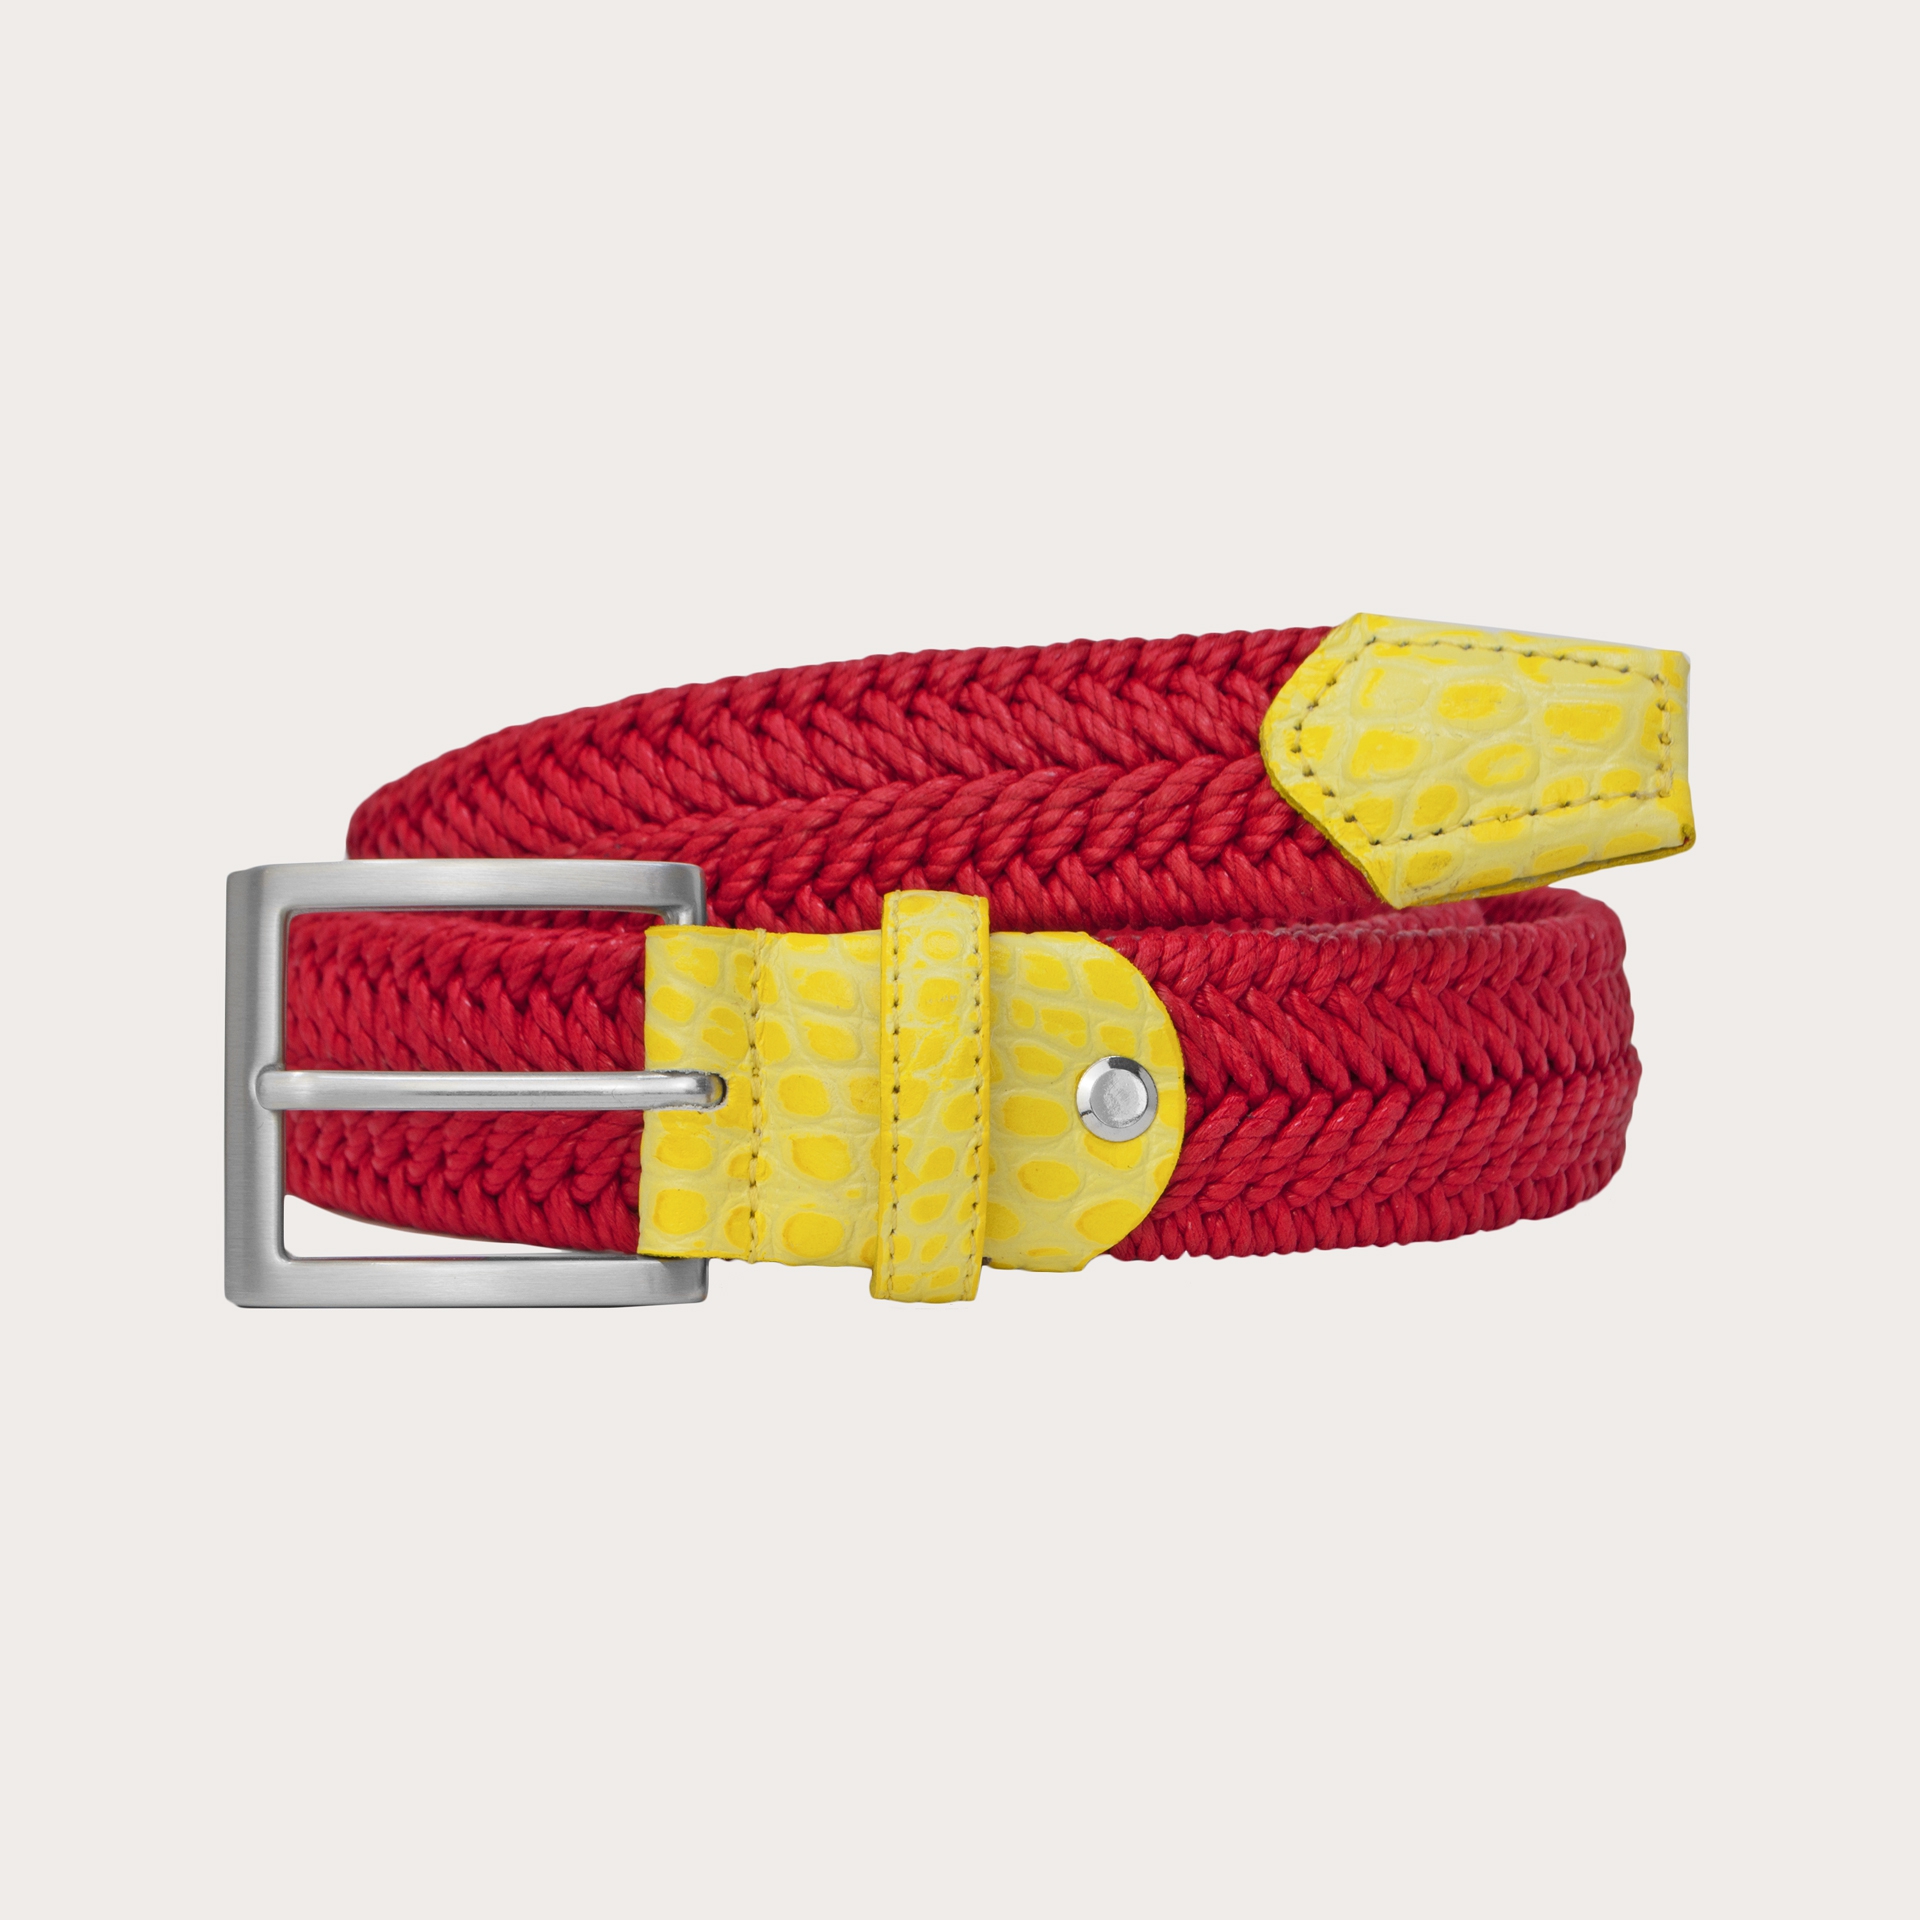 BRUCLE Red braided elastic belt with nickel free buckle